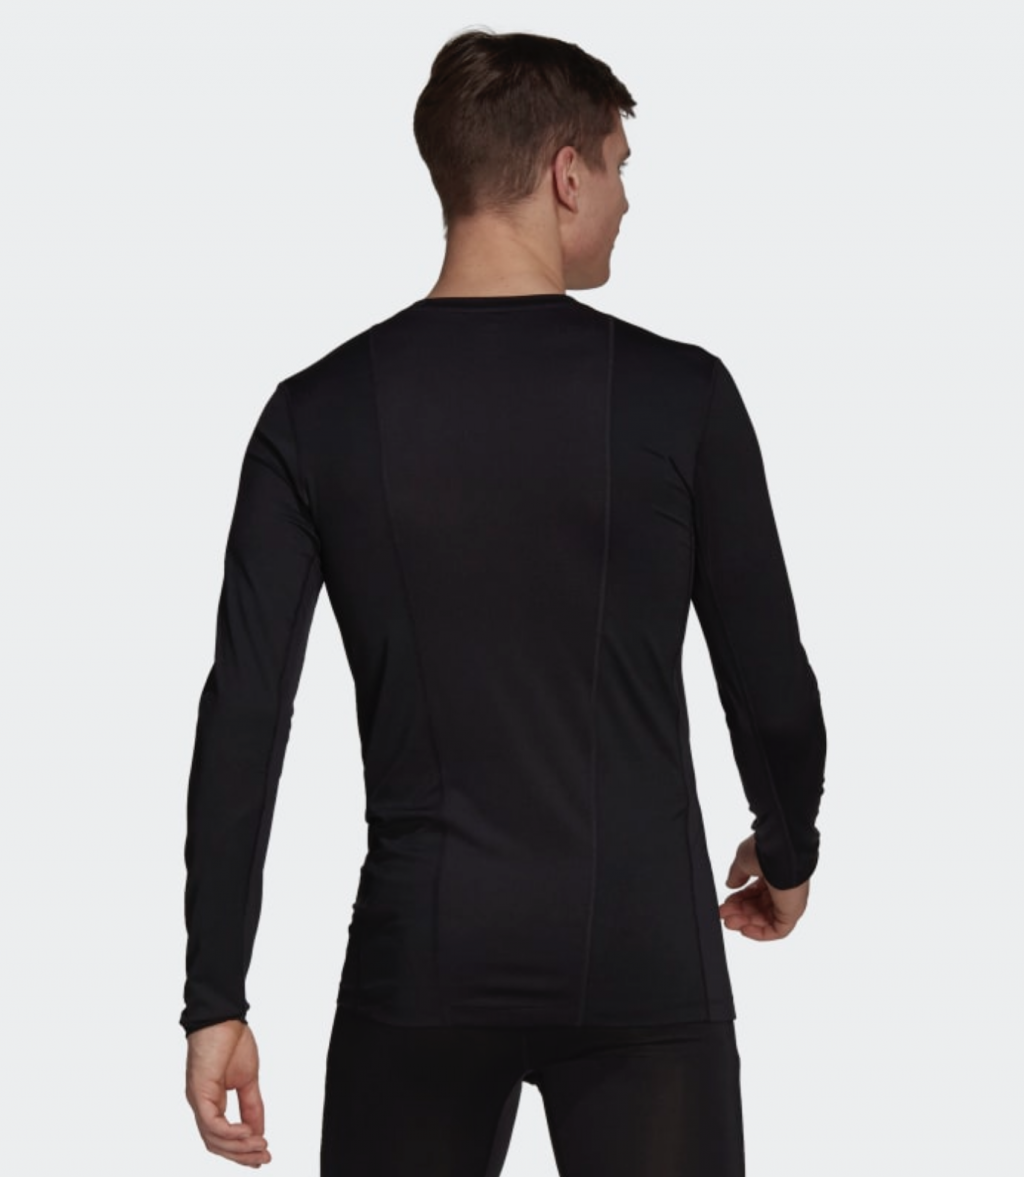 Adidas Baselayer TechFit Long Sleeves T-Shirt/термоактивное белье майка